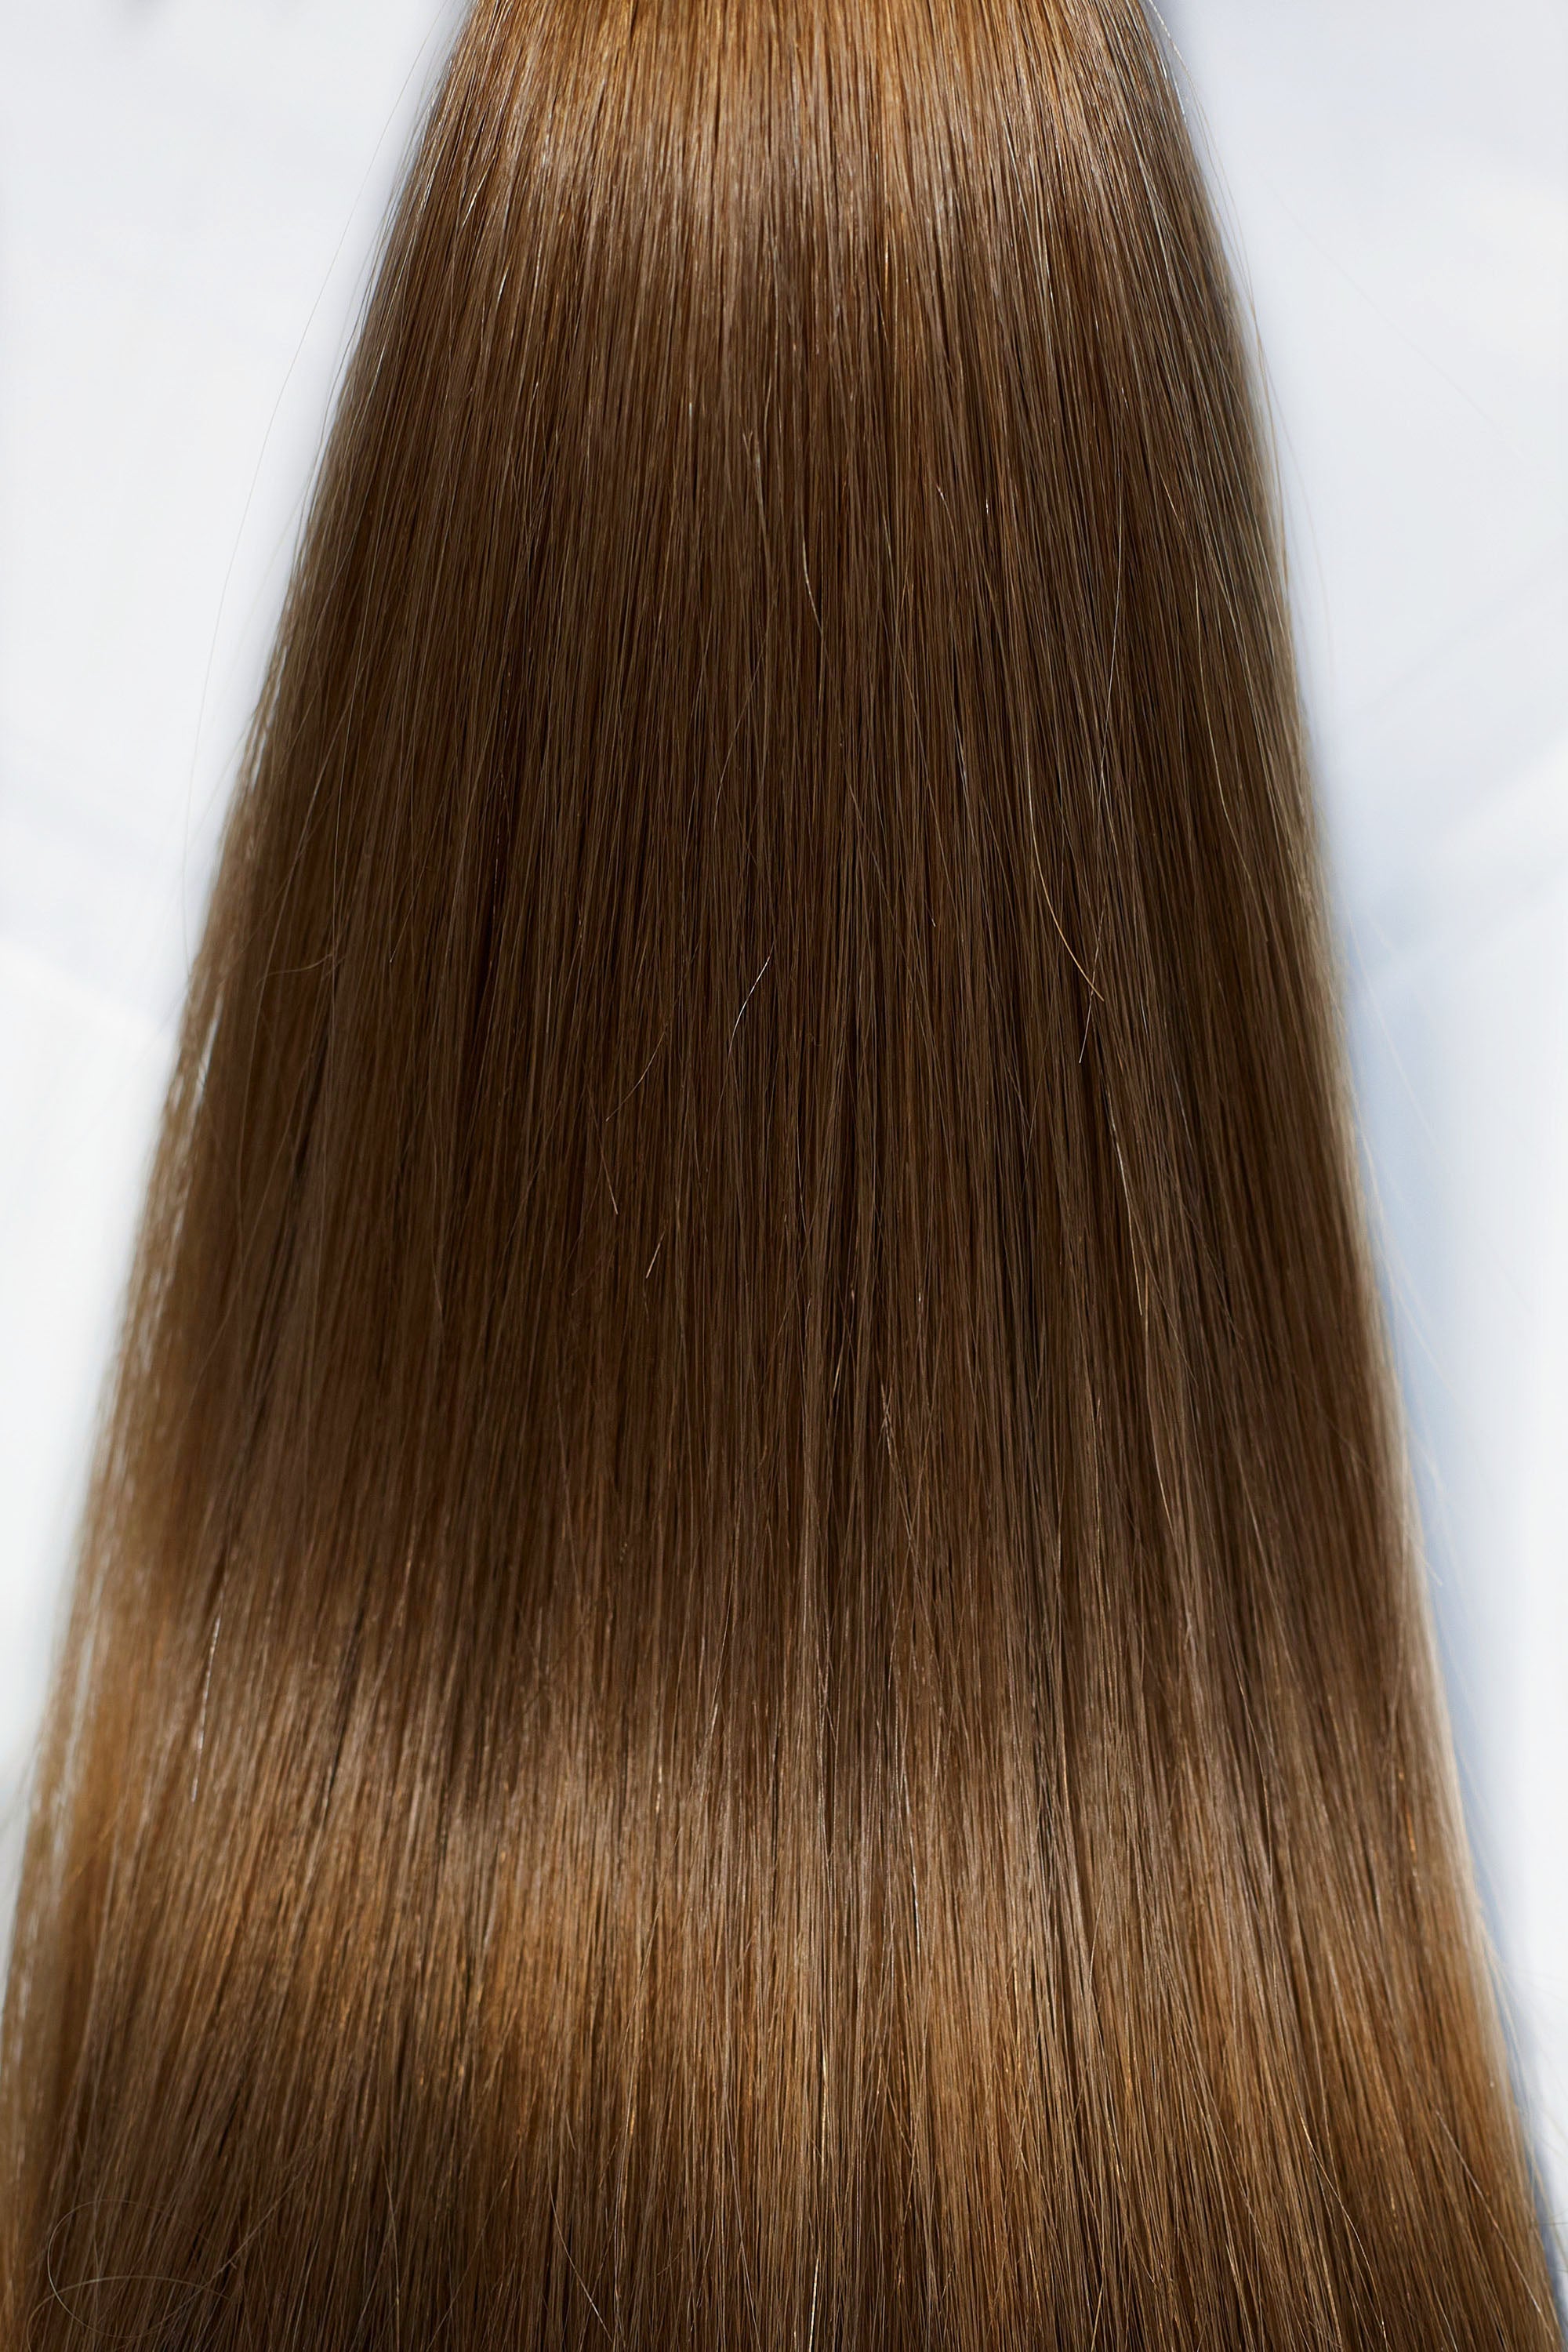 Behair professional Keratin Tip "Premium" 16" (40cm) Natural Straight Chestnut #6 - 25g (Micro - 0.5g each pcs) hair extensions